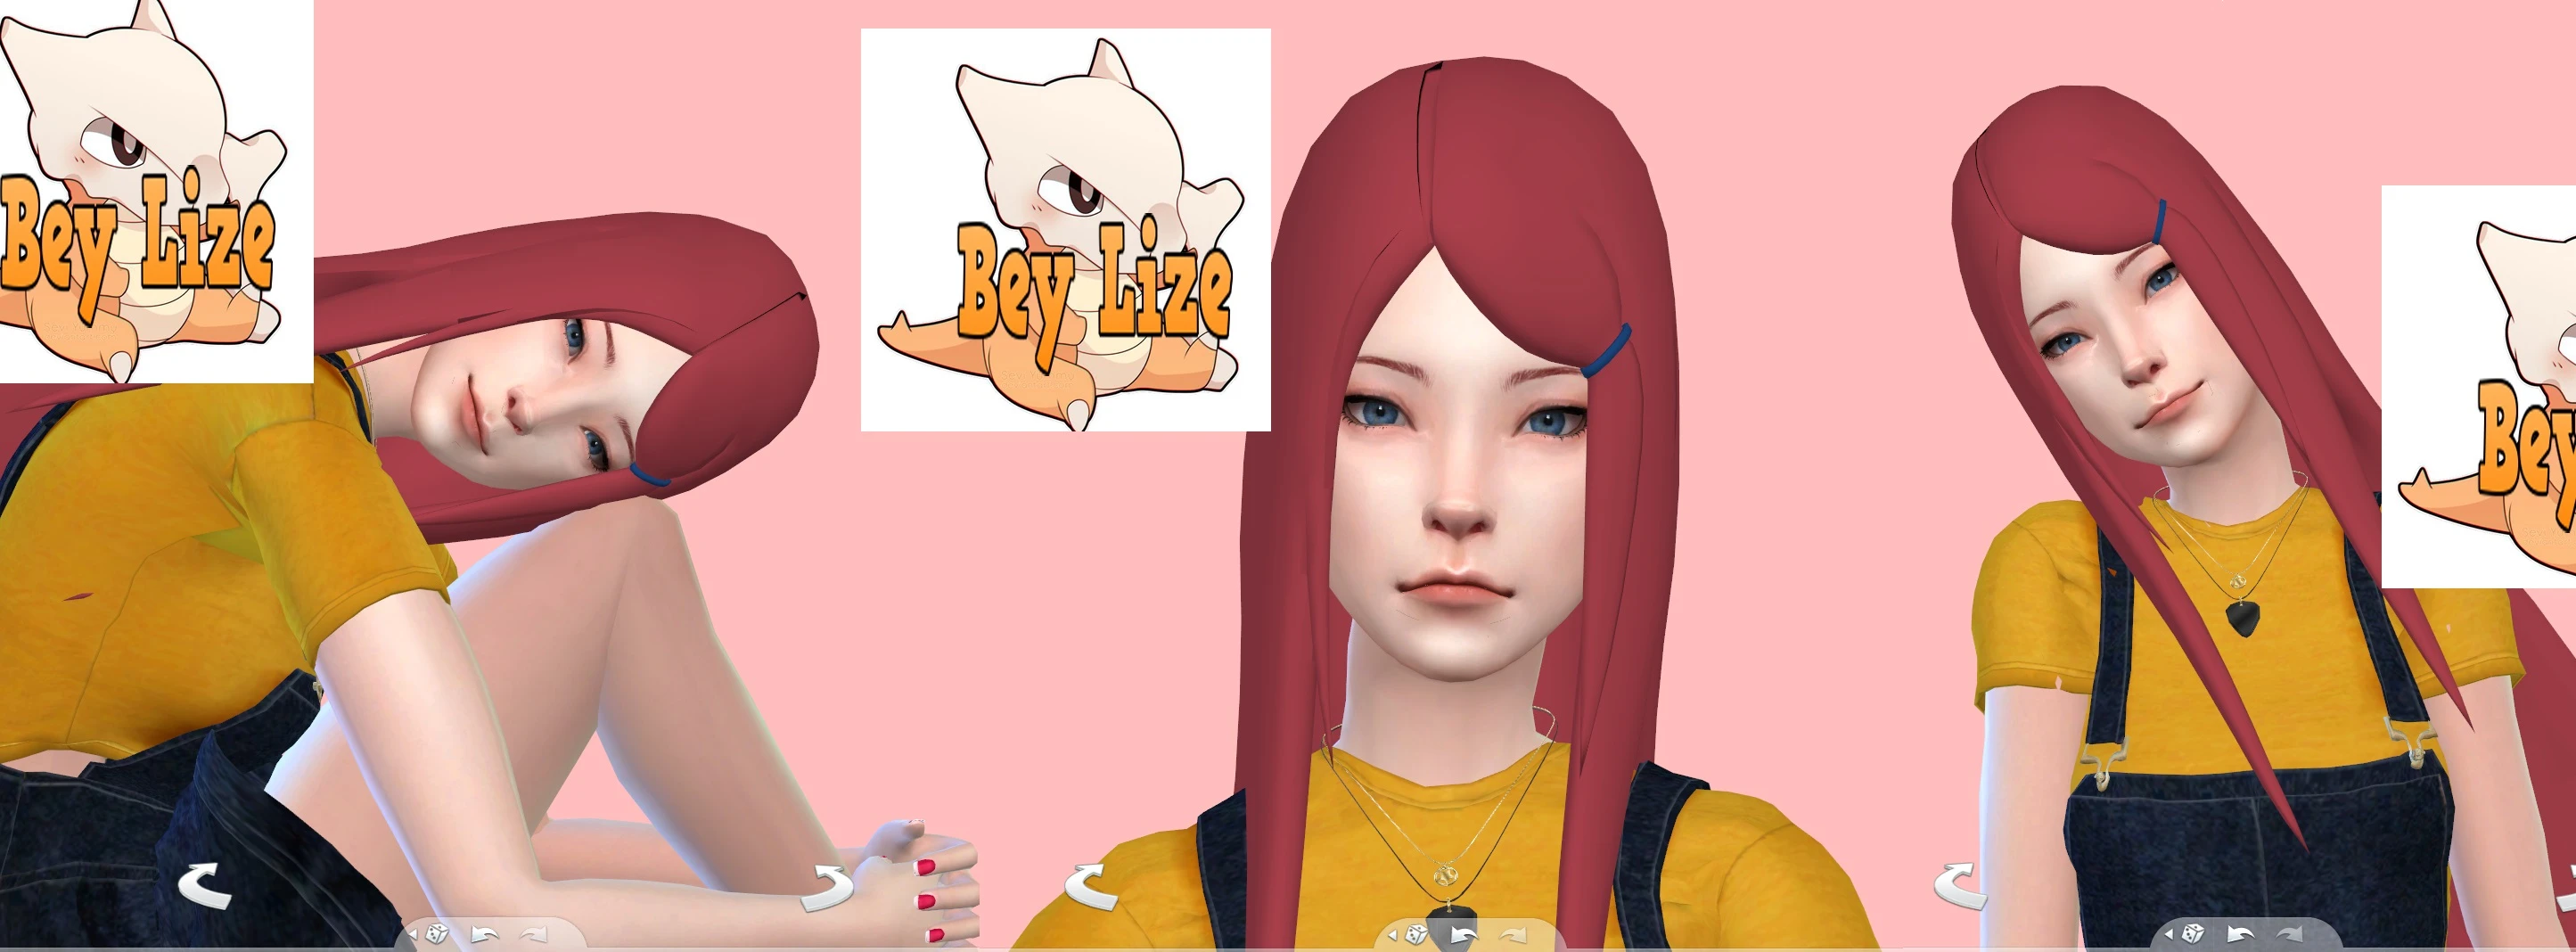 Sims 4 Anime Mod | Peatix